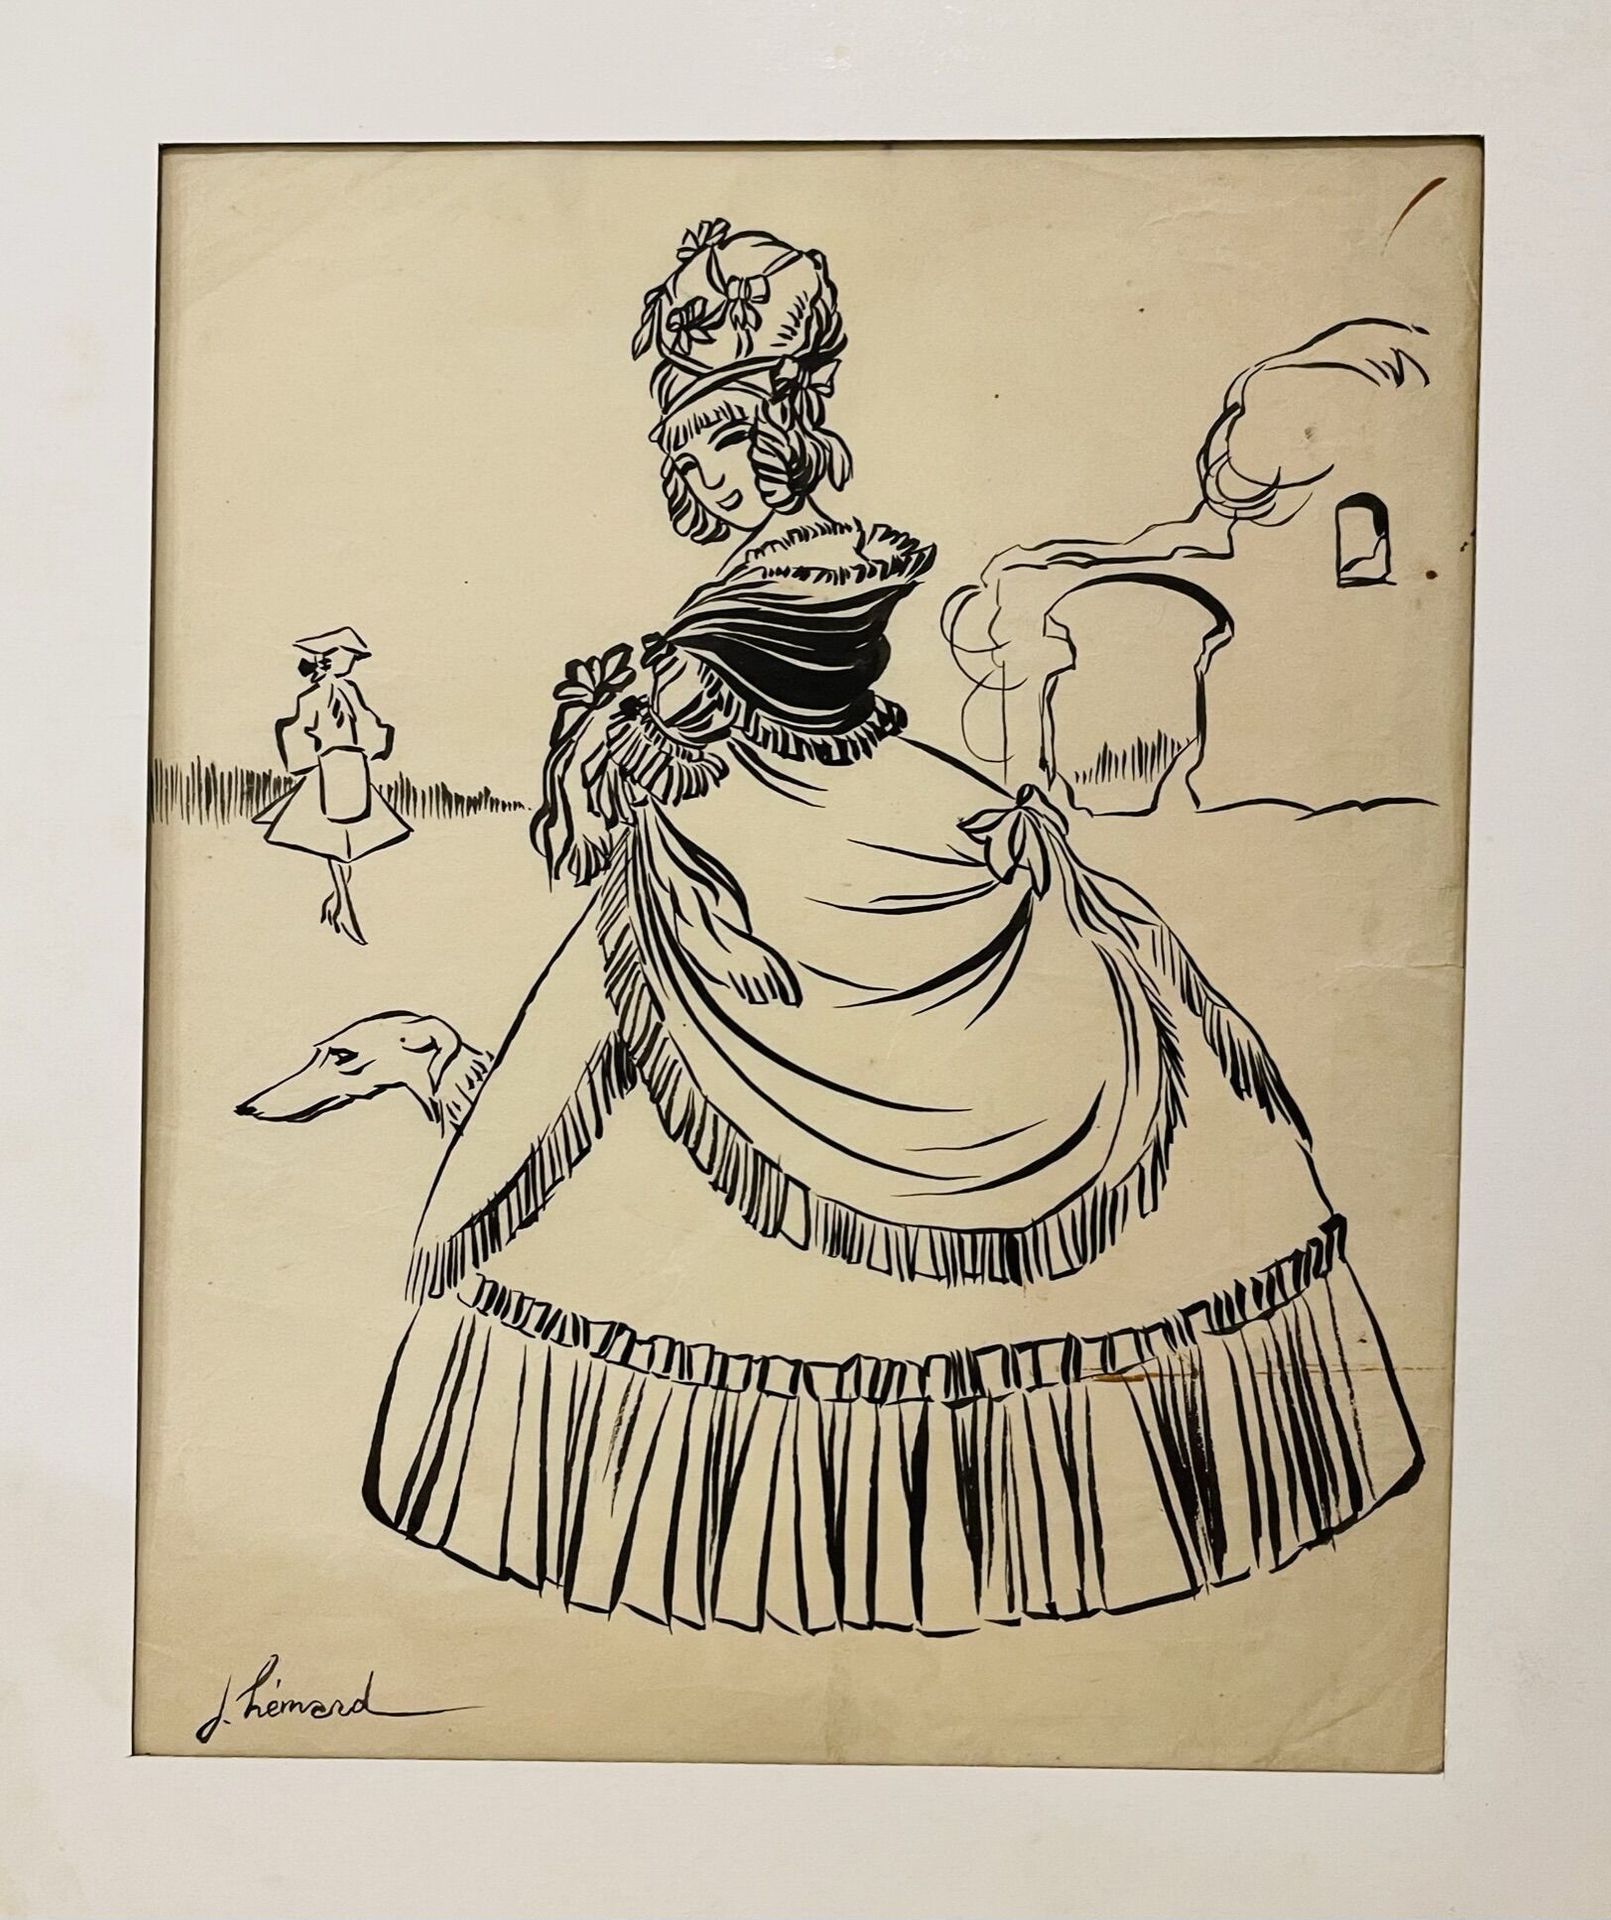 Null Joseph HÉMARD (Les Mureaux 1880/1- Paris 1961)

"Elegant woman and greyhoun&hellip;